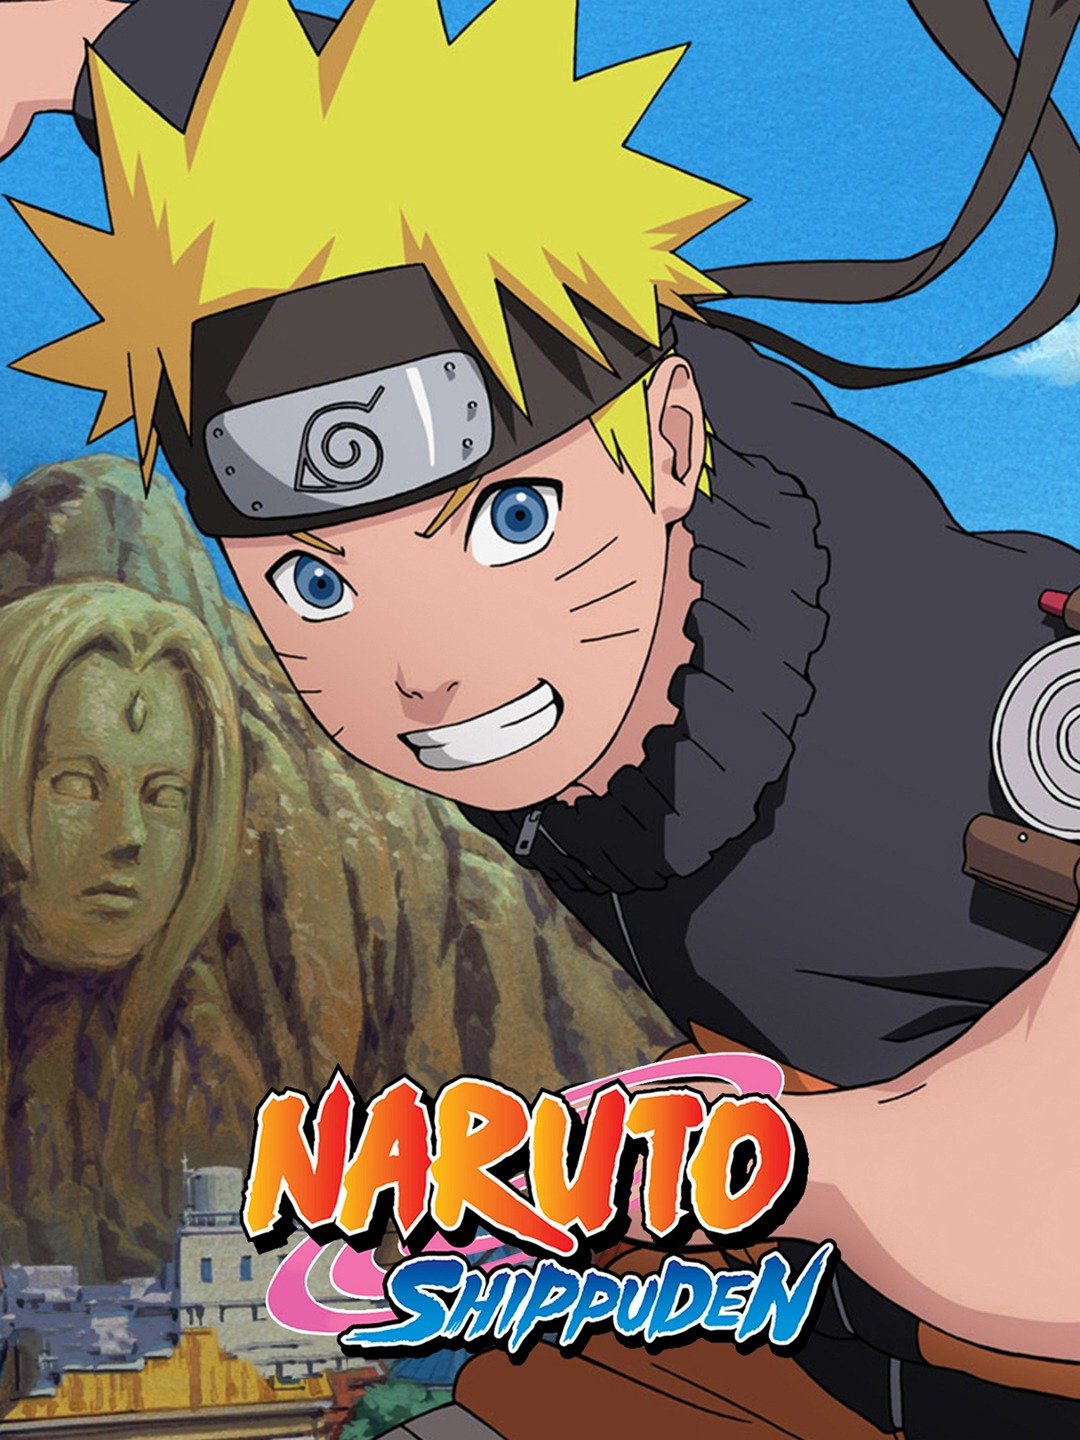 Naruto: Shippuden - Rotten Tomatoes - Where Can I Watch All 21 Seasons Of Naruto